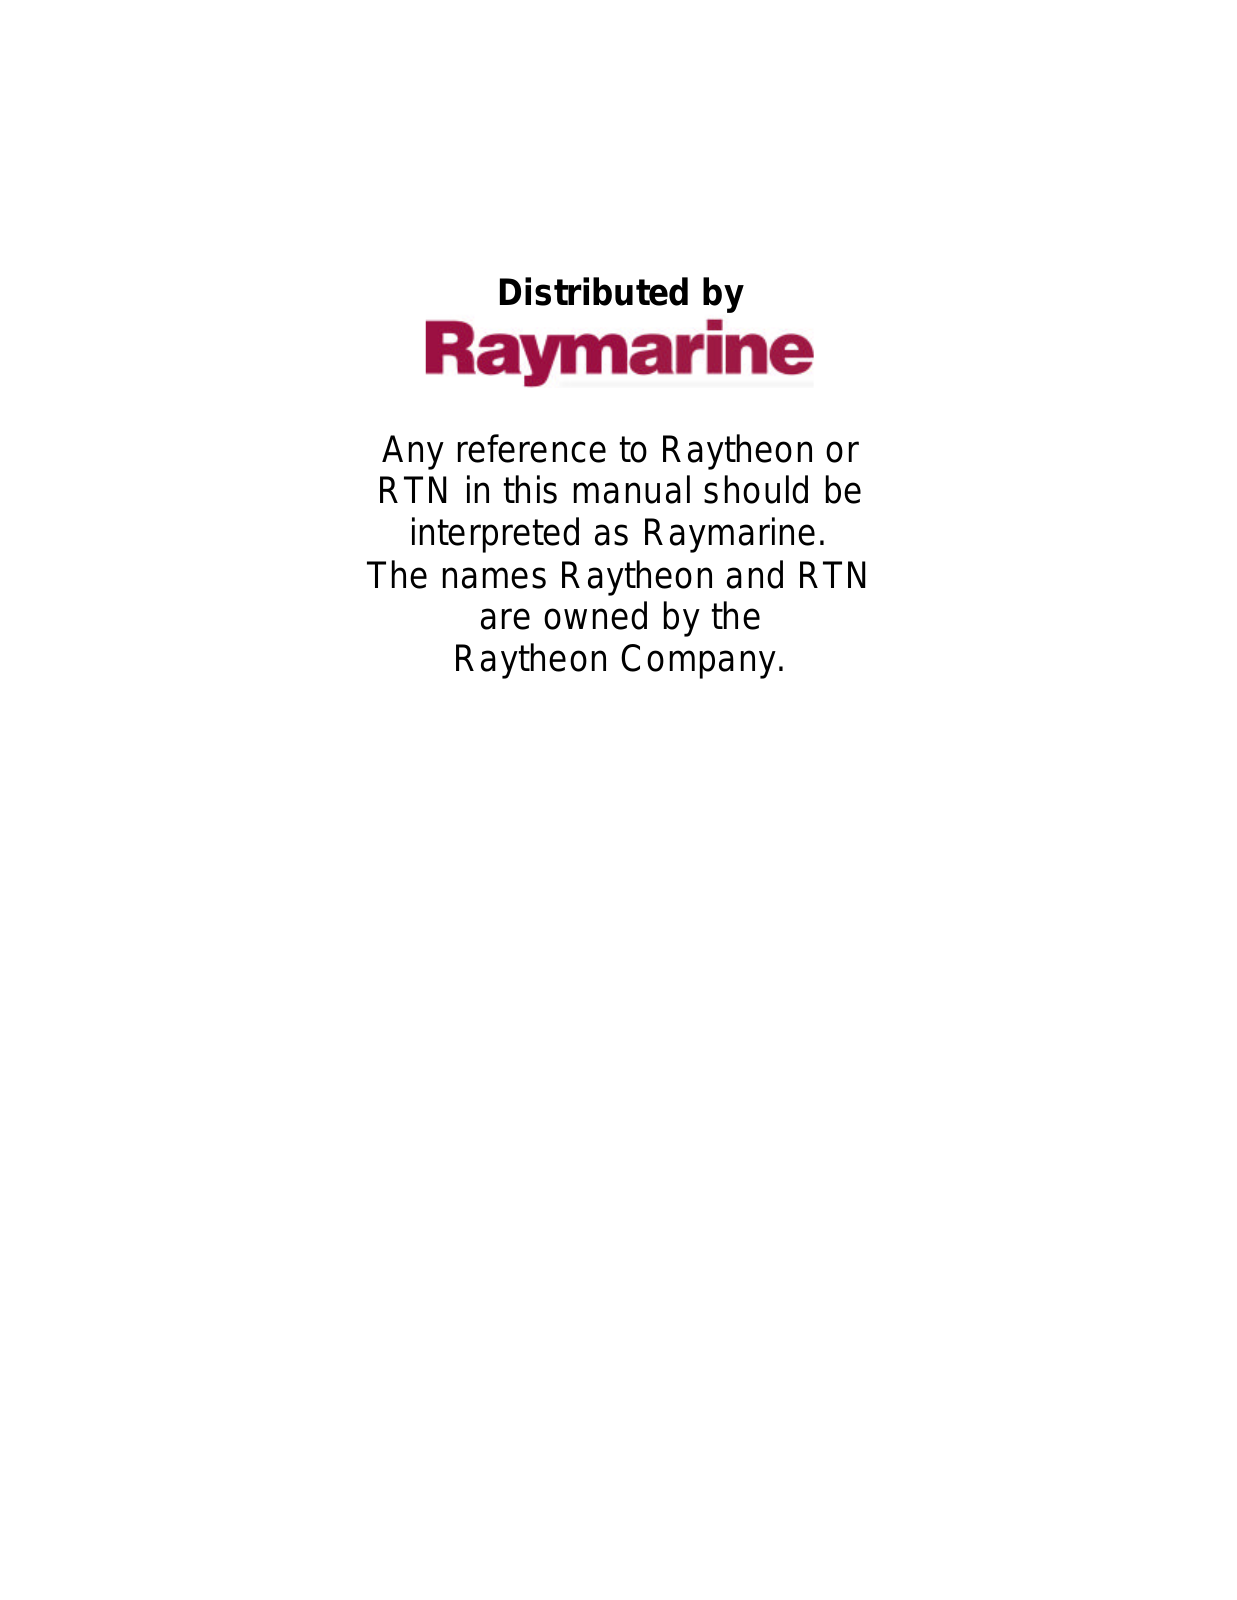 Raymarine APELCO 7000 Manual